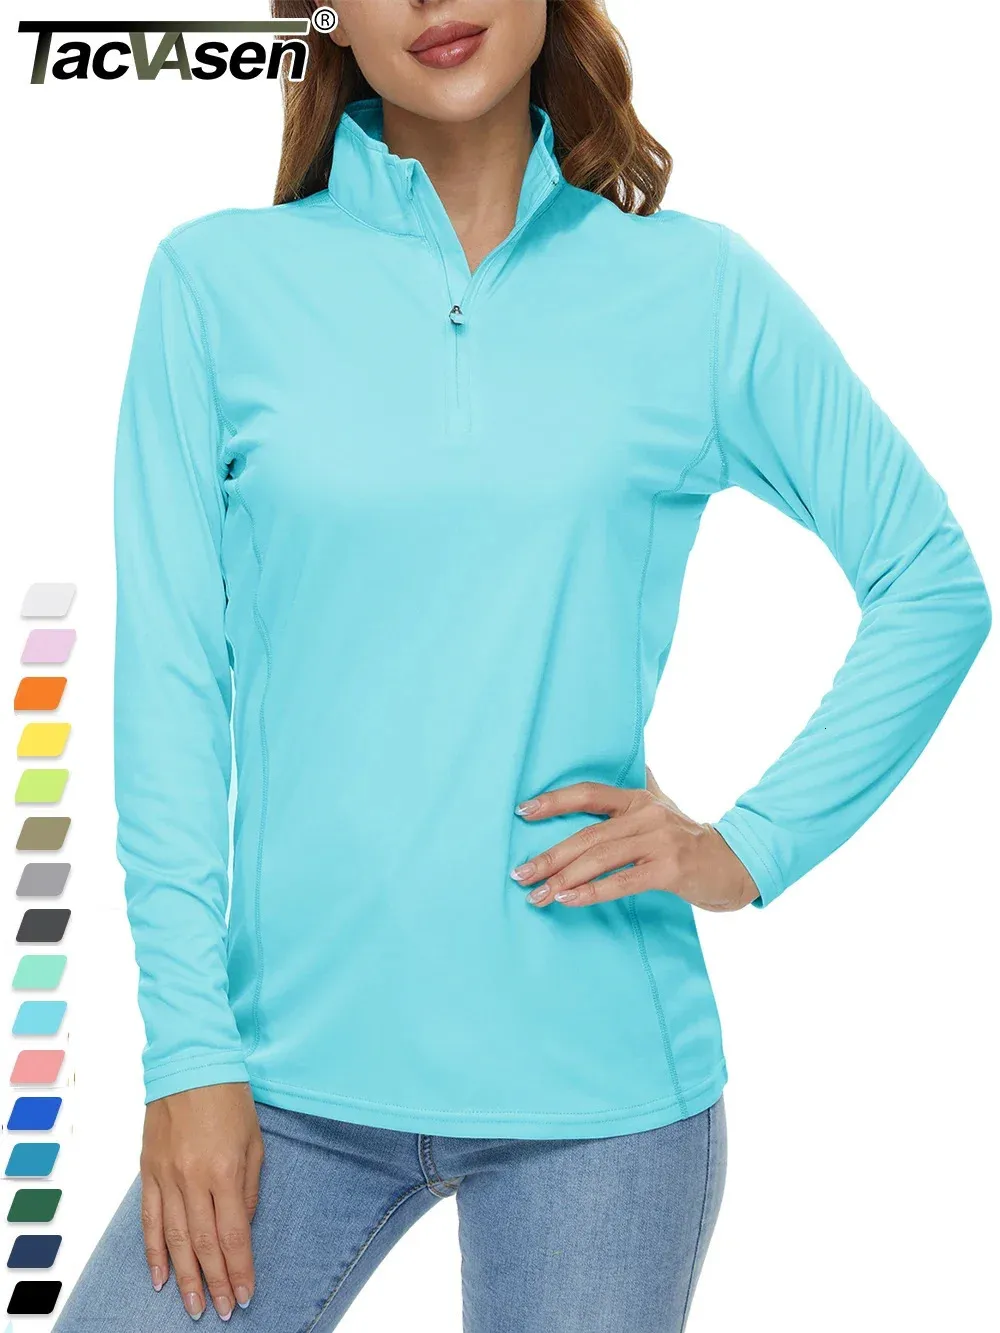 Tacvasen upf 50 빠른 건조 긴 소매 T 셔츠 여성 안티 UVSUN 보호 셔츠 달리기 하이킹 낚시 티셔츠 야외 240103